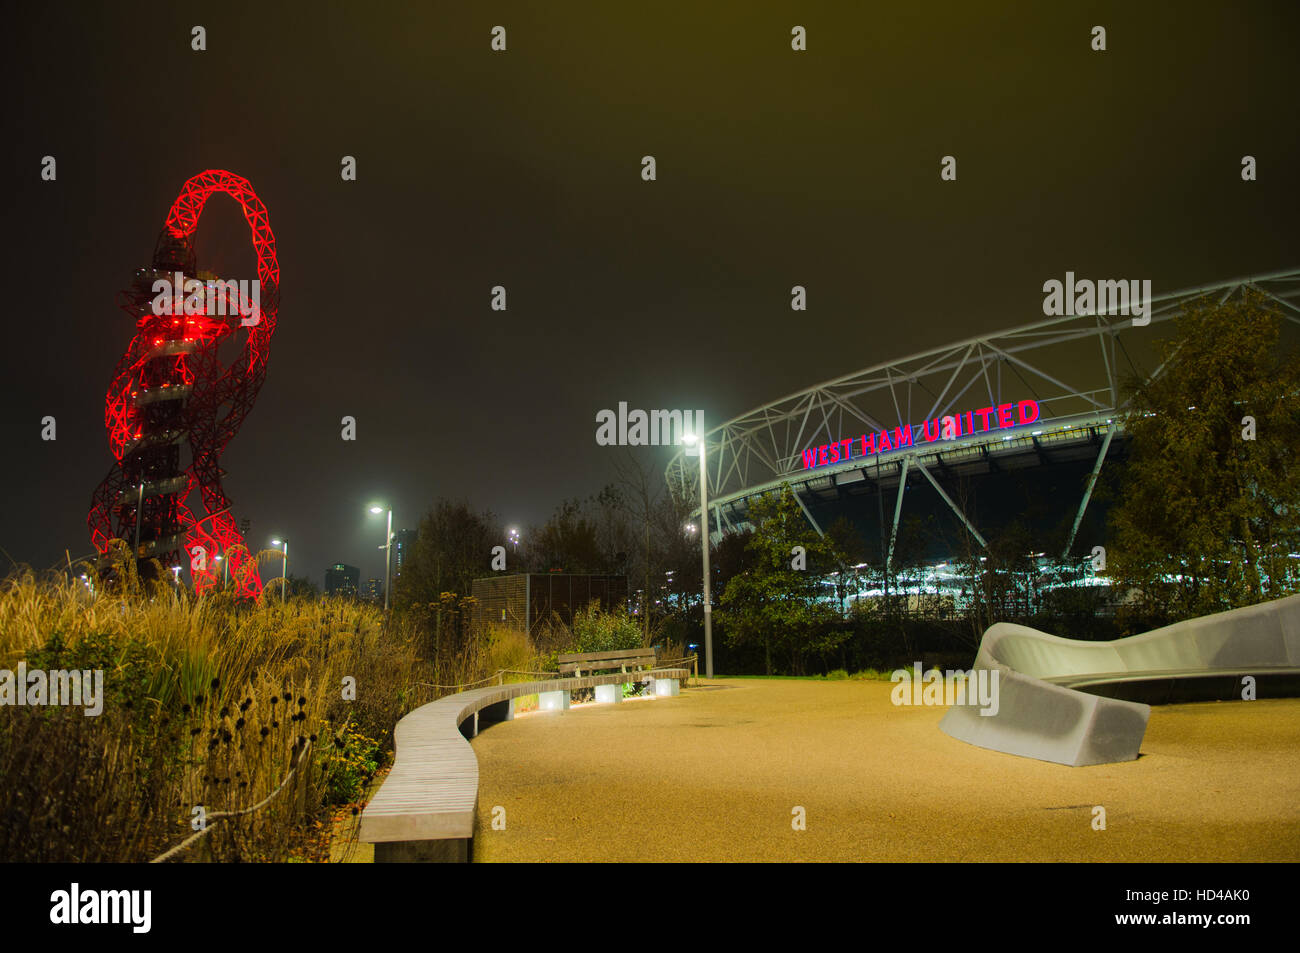 Queen Elizabeth Olympic Park and London Stadium. West Ham United Football Club. Orbit. Night Photography Stock Photo